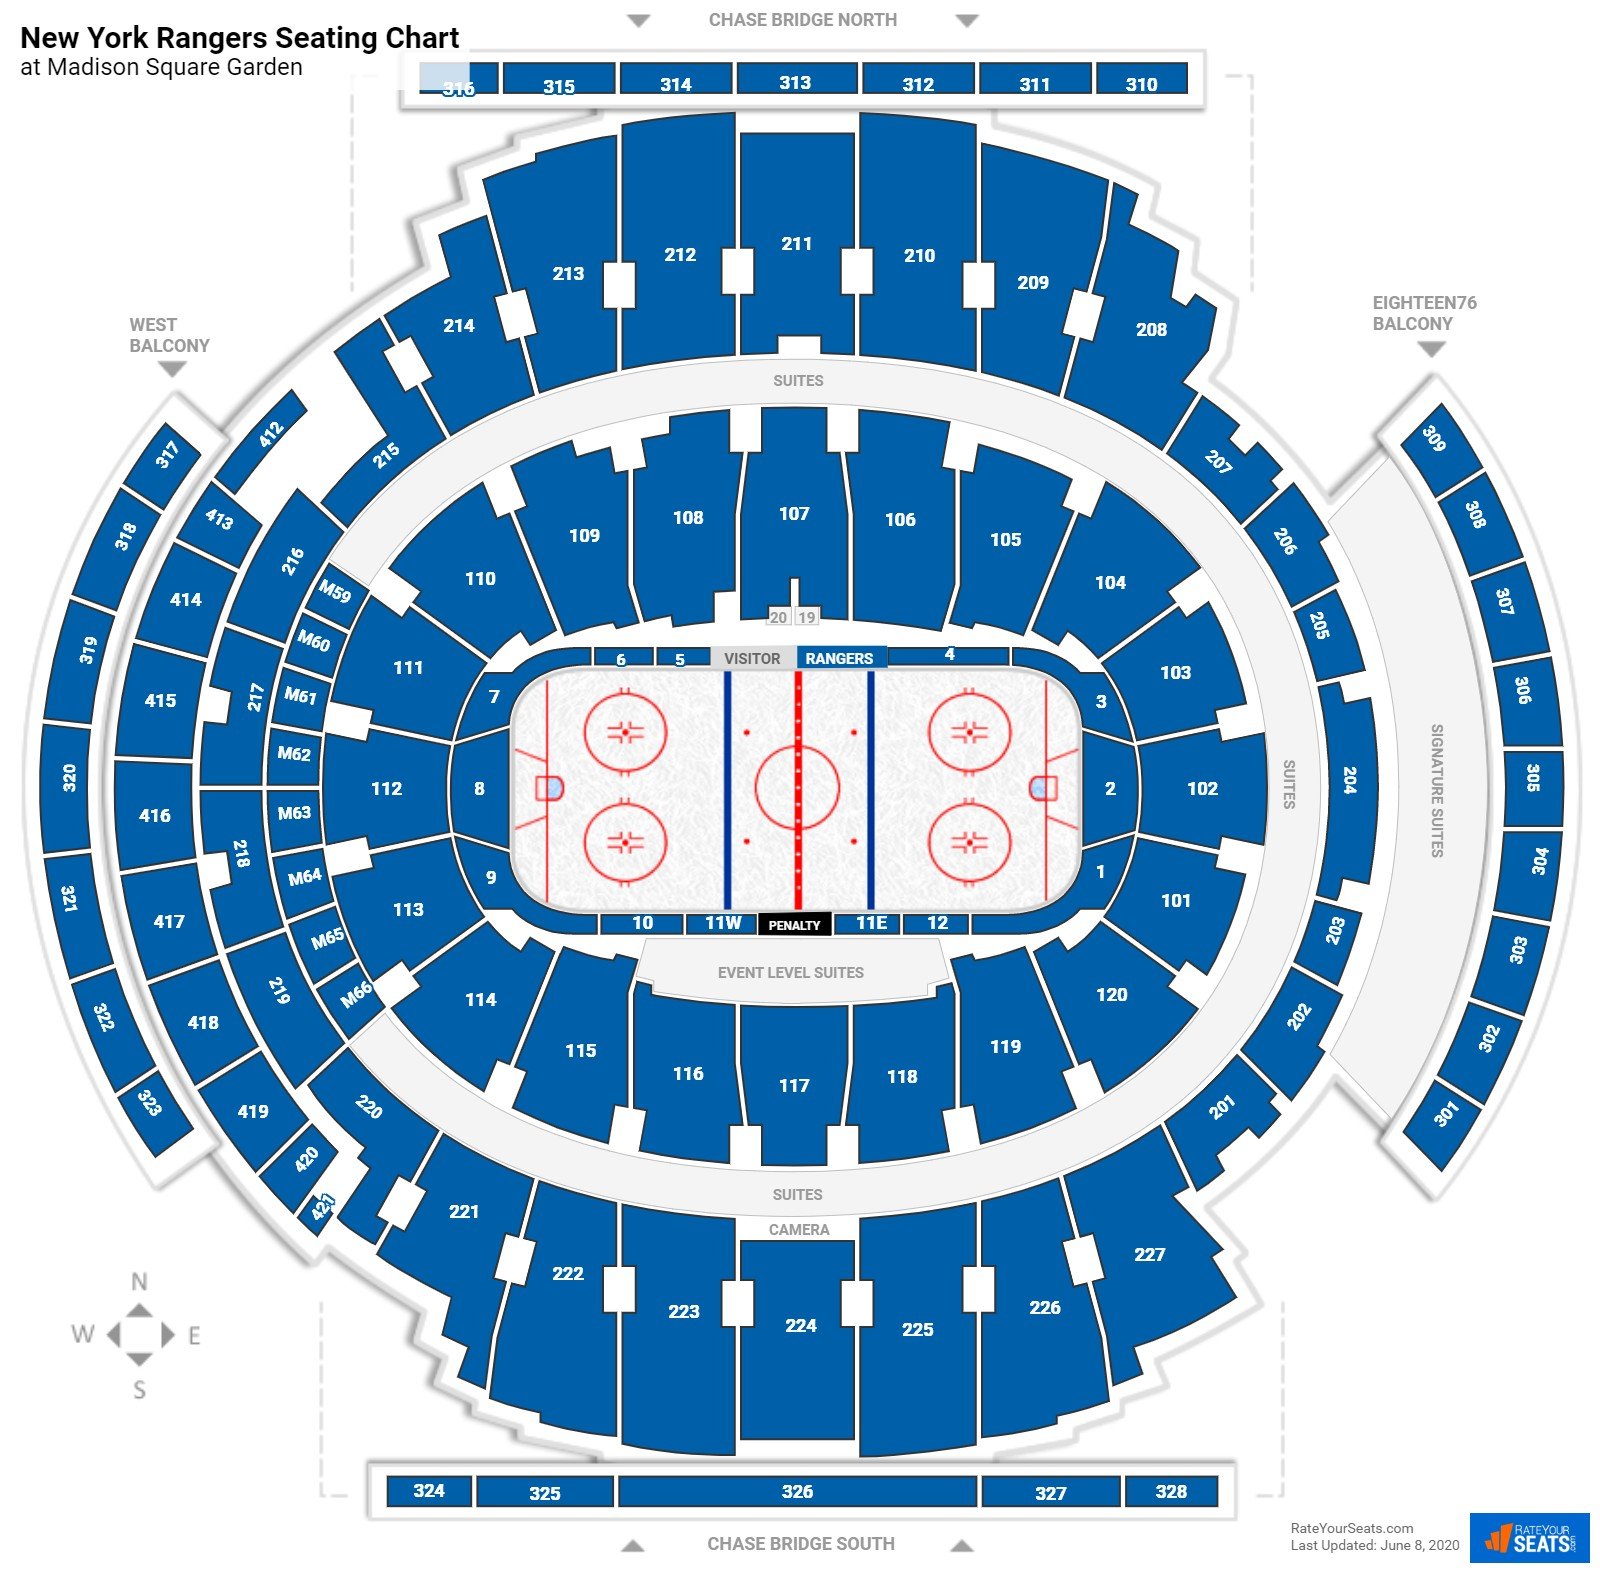 New York Rangers Seating Charts At Square Garden. square garden rangers sea...